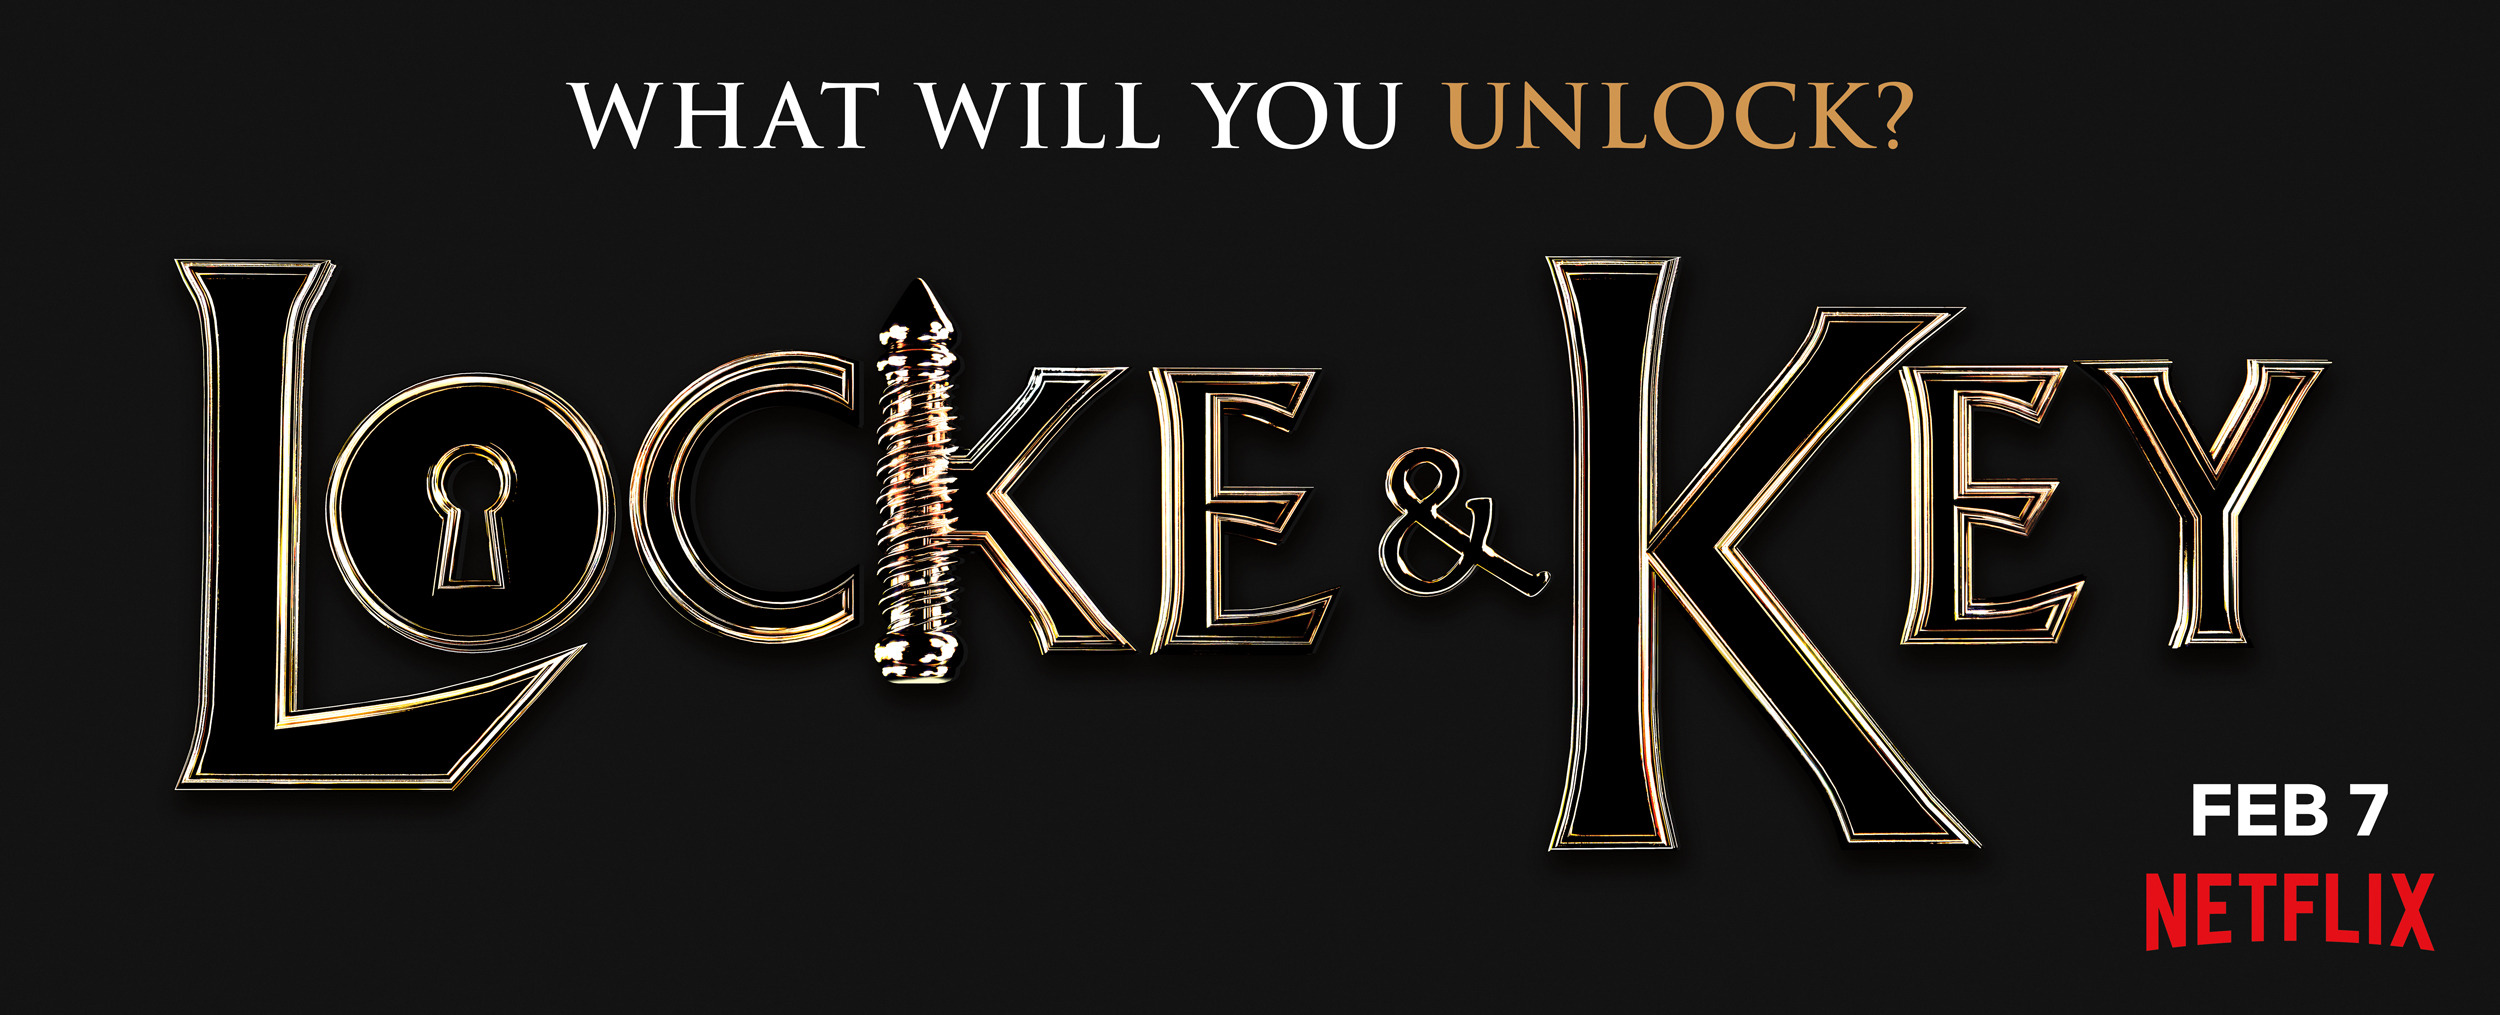 Mega Sized TV Poster Image for Locke & Key (#13 of 16)